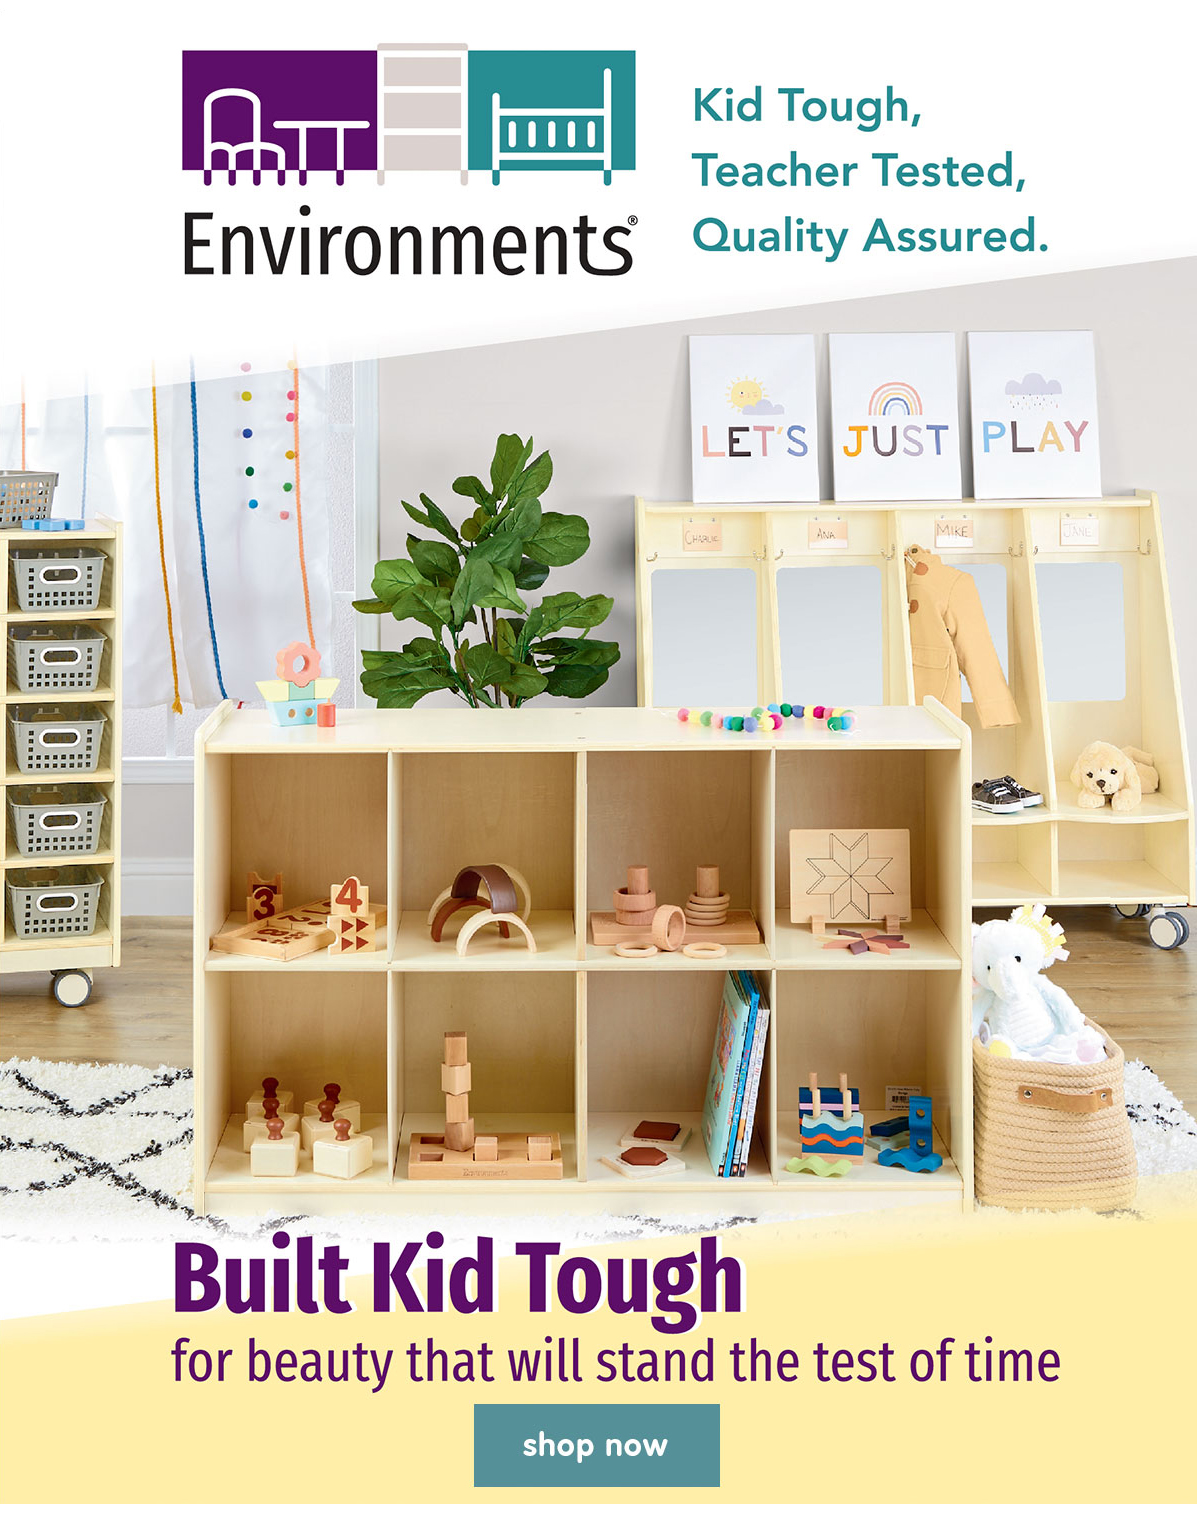 Environments Furniture - Kid Tough, Teacher Tested, Quality Assured